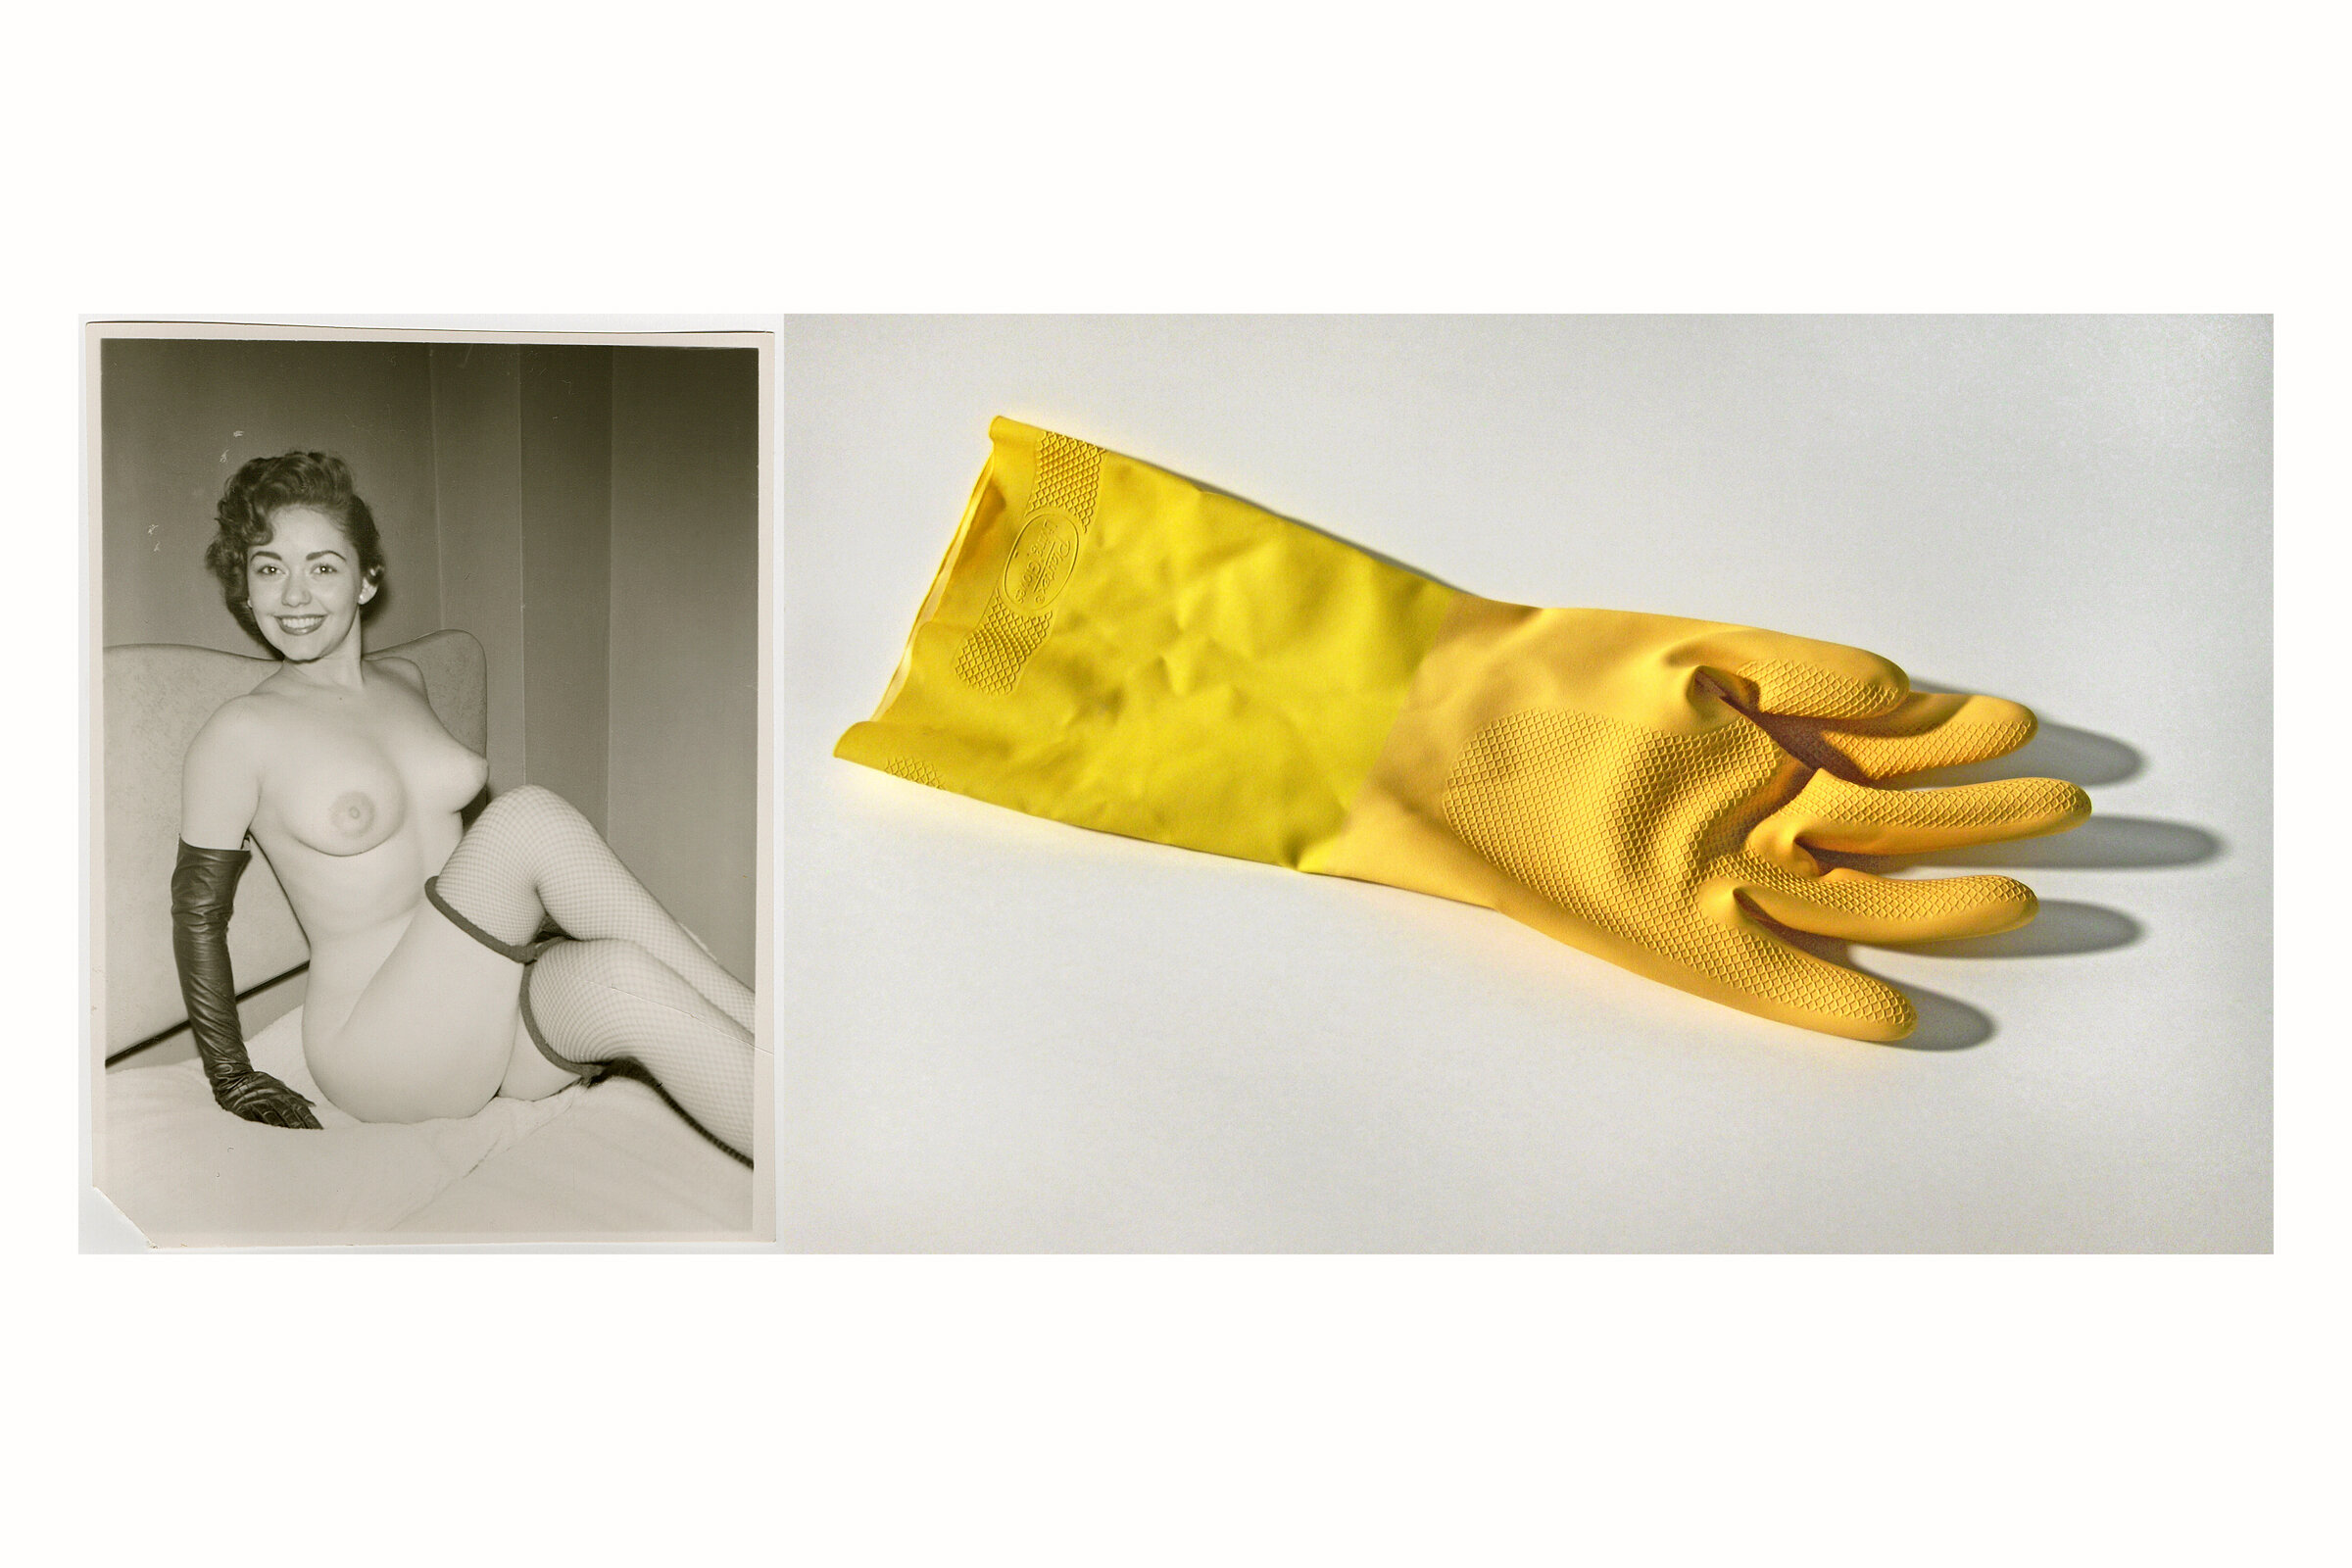 ThomasWhitworth_Constructed Realities (Female Nude-Yellow Glove).jpg